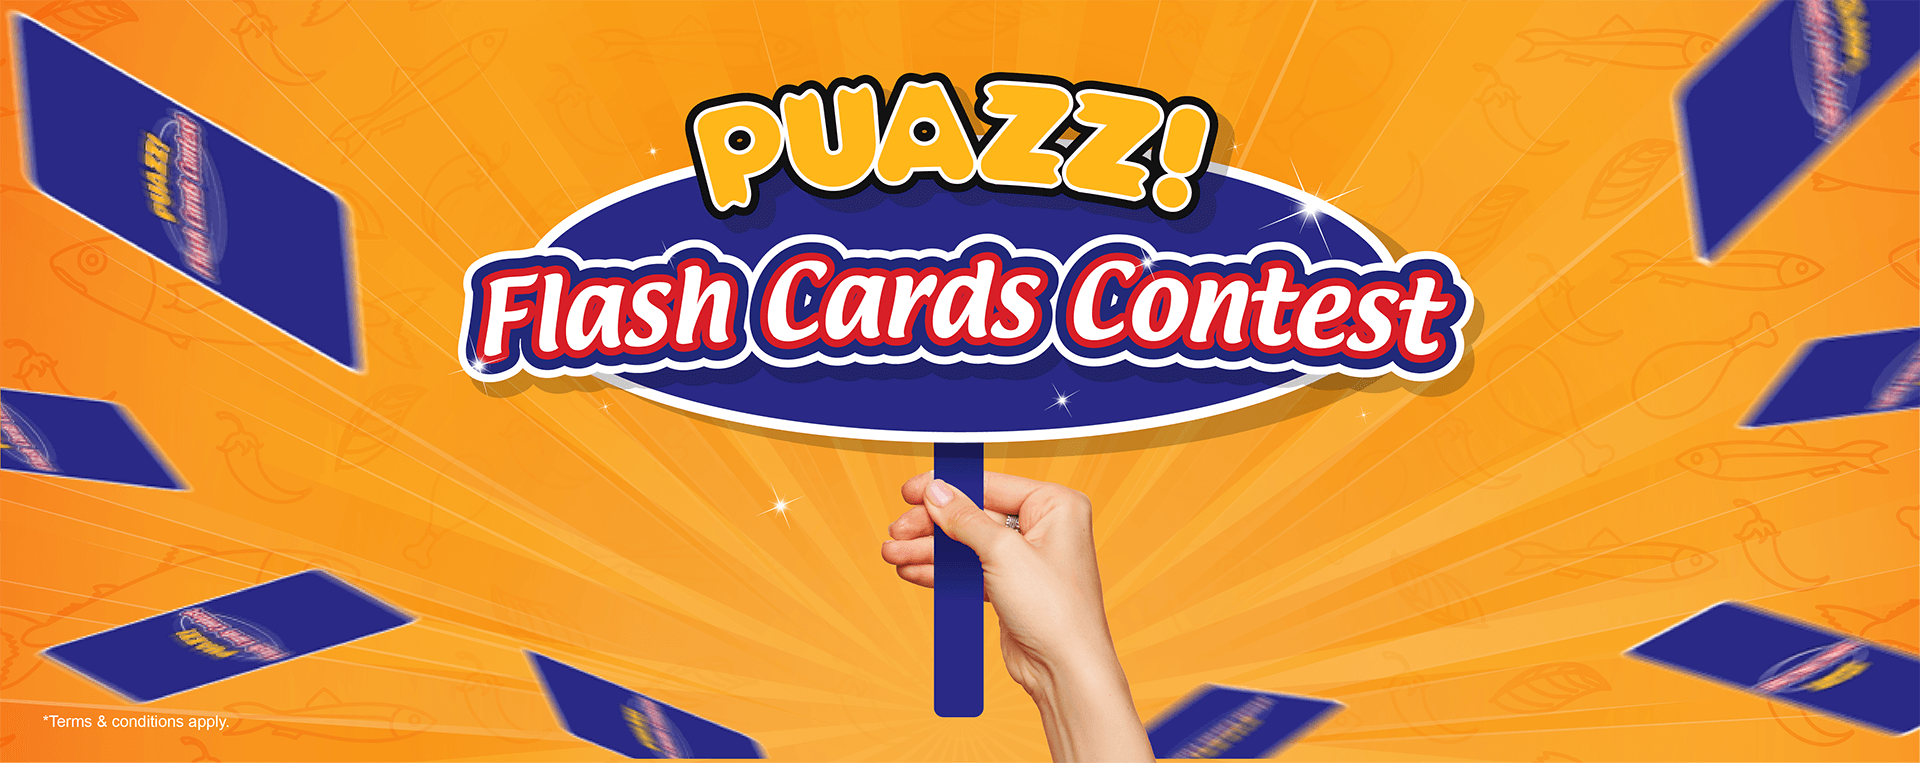 #PUAZZ FlashCards Contest